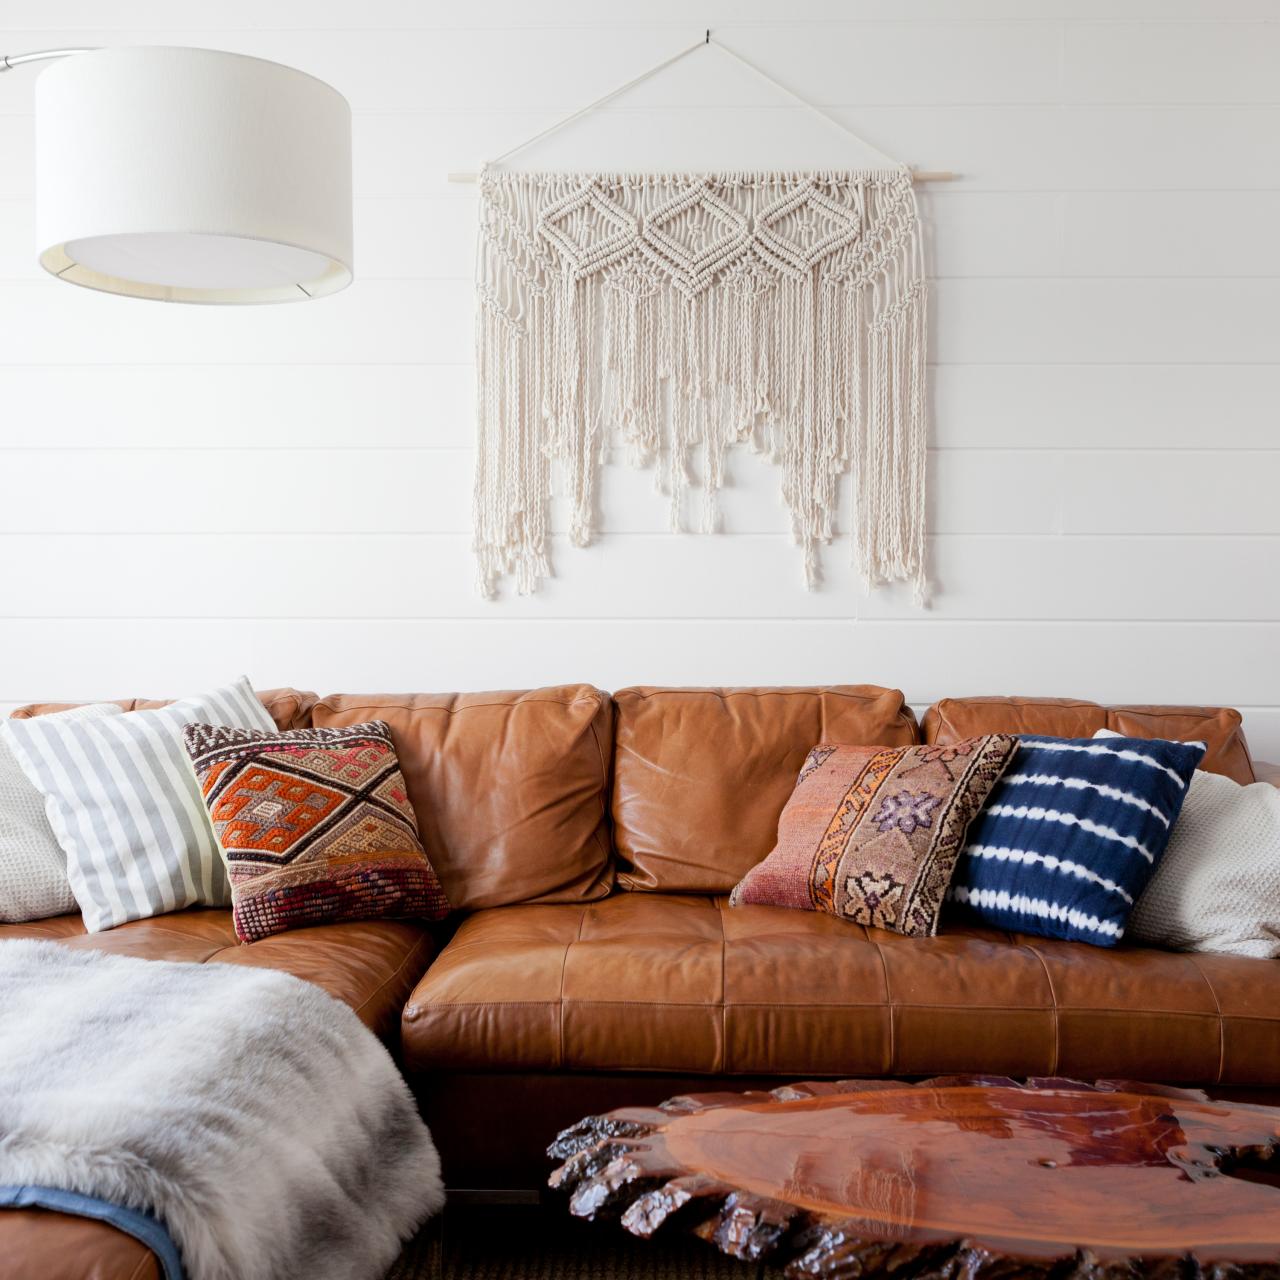 31 Wall Decor Ideas to Put Over the Sofa - Craftsy Hacks